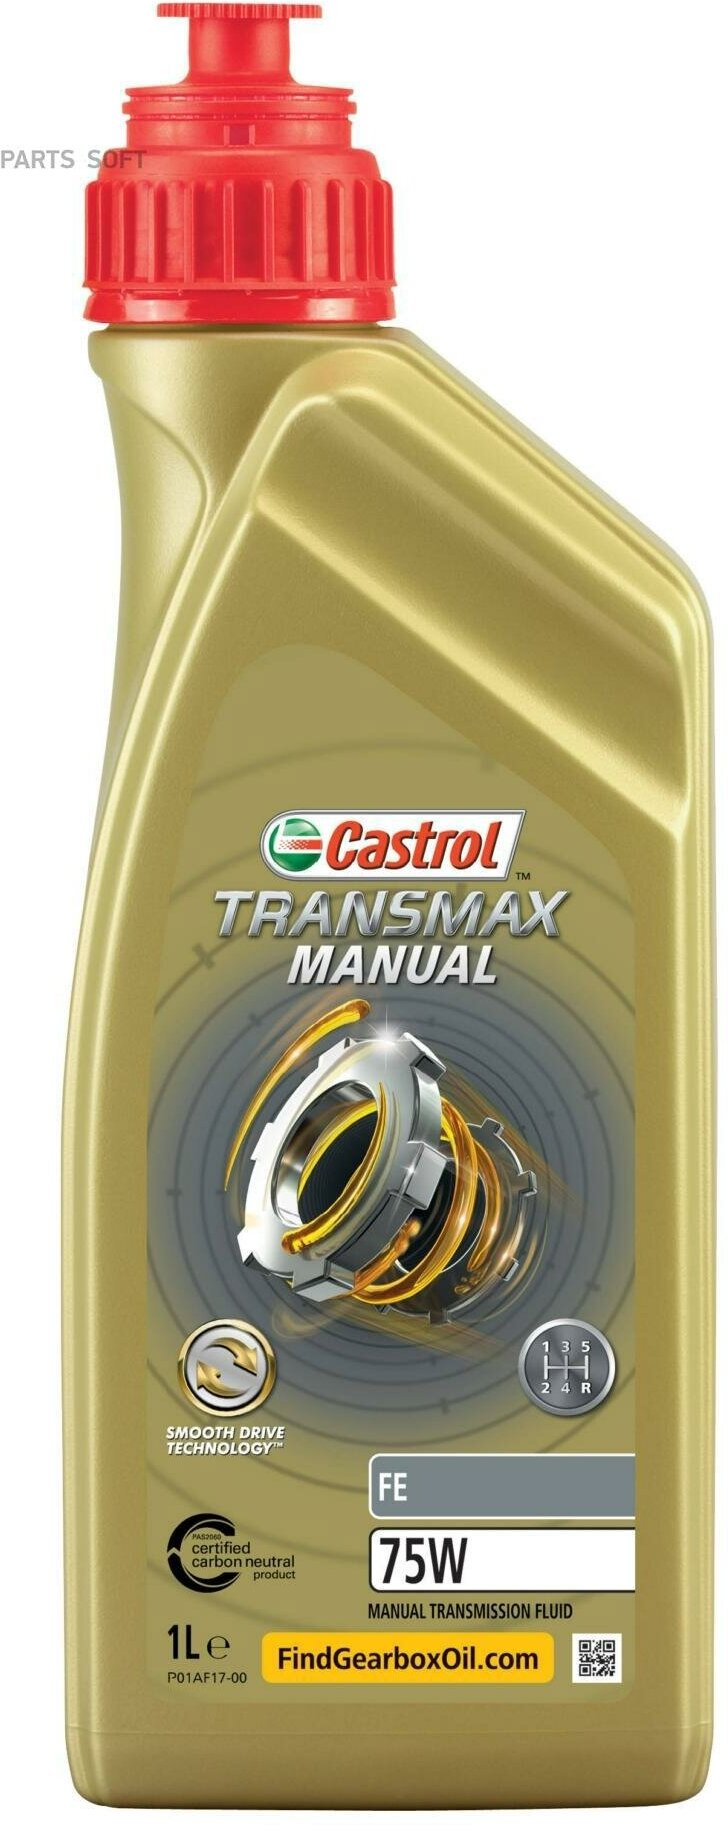 Масло трансм. Transmax Manual FE 75W (1 л.) CASTROL / арт. 15D7EA - (1 шт)